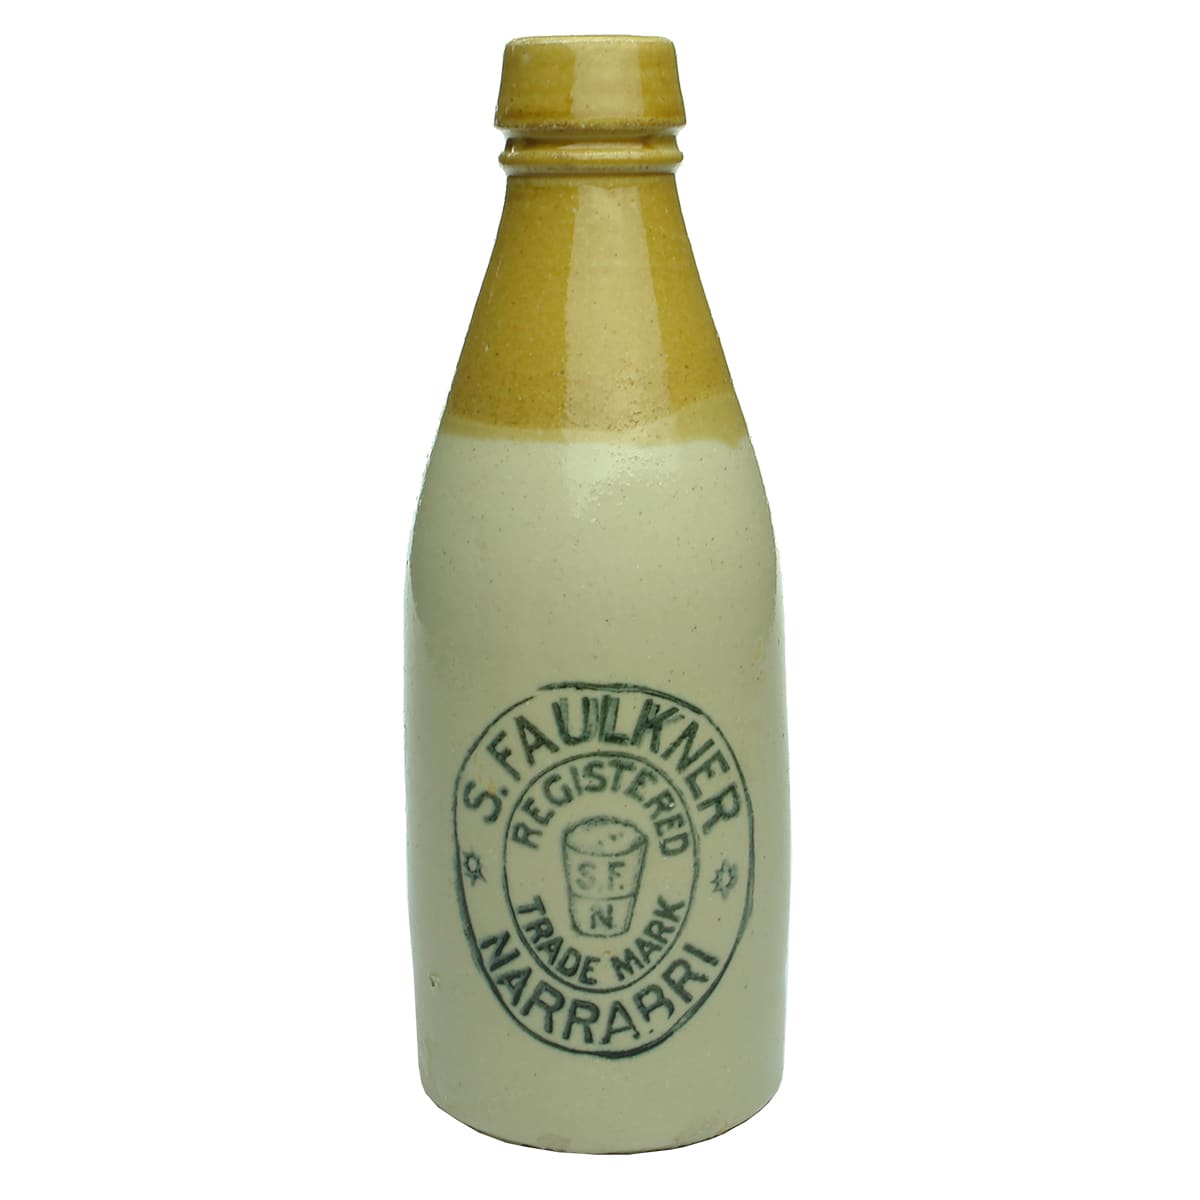 Ginger Beer. S. Faulkner, Narrabri. Cork stopper. Champagne. Tan top.  (New South Wales)